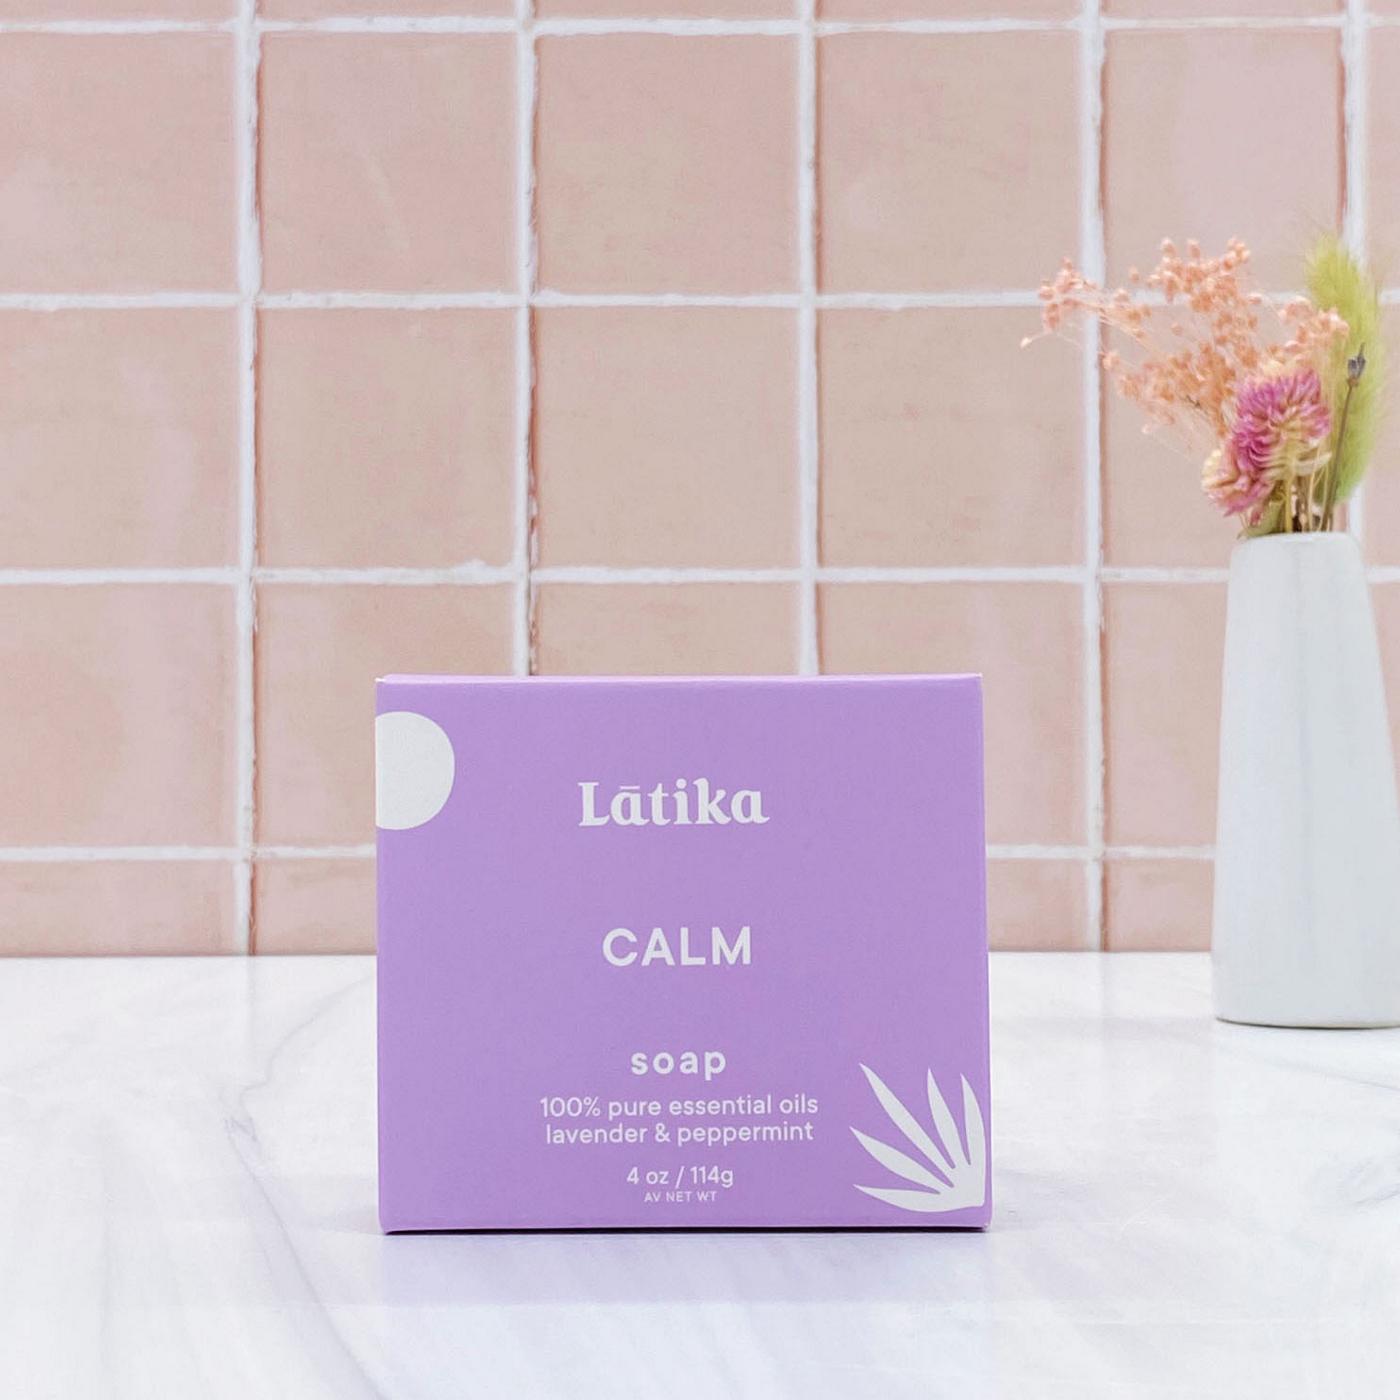 Latika Body Essentials Calm Bar Soap Lavender & Peppermint; image 3 of 3